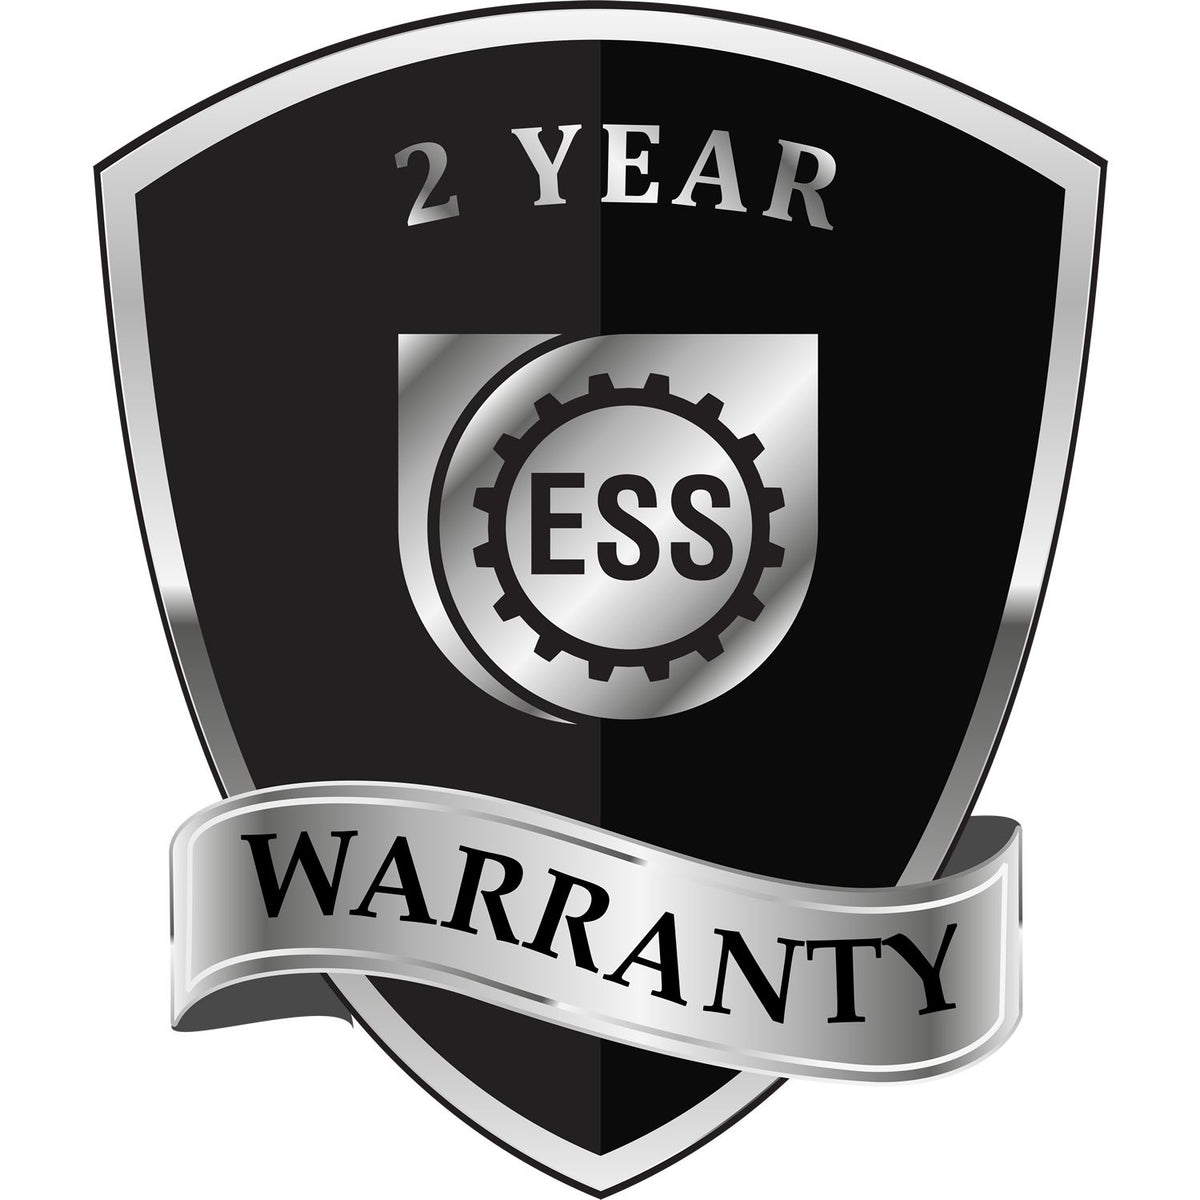 A badge or emblem showing a warranty icon for the Handheld Florida Land Surveyor Seal